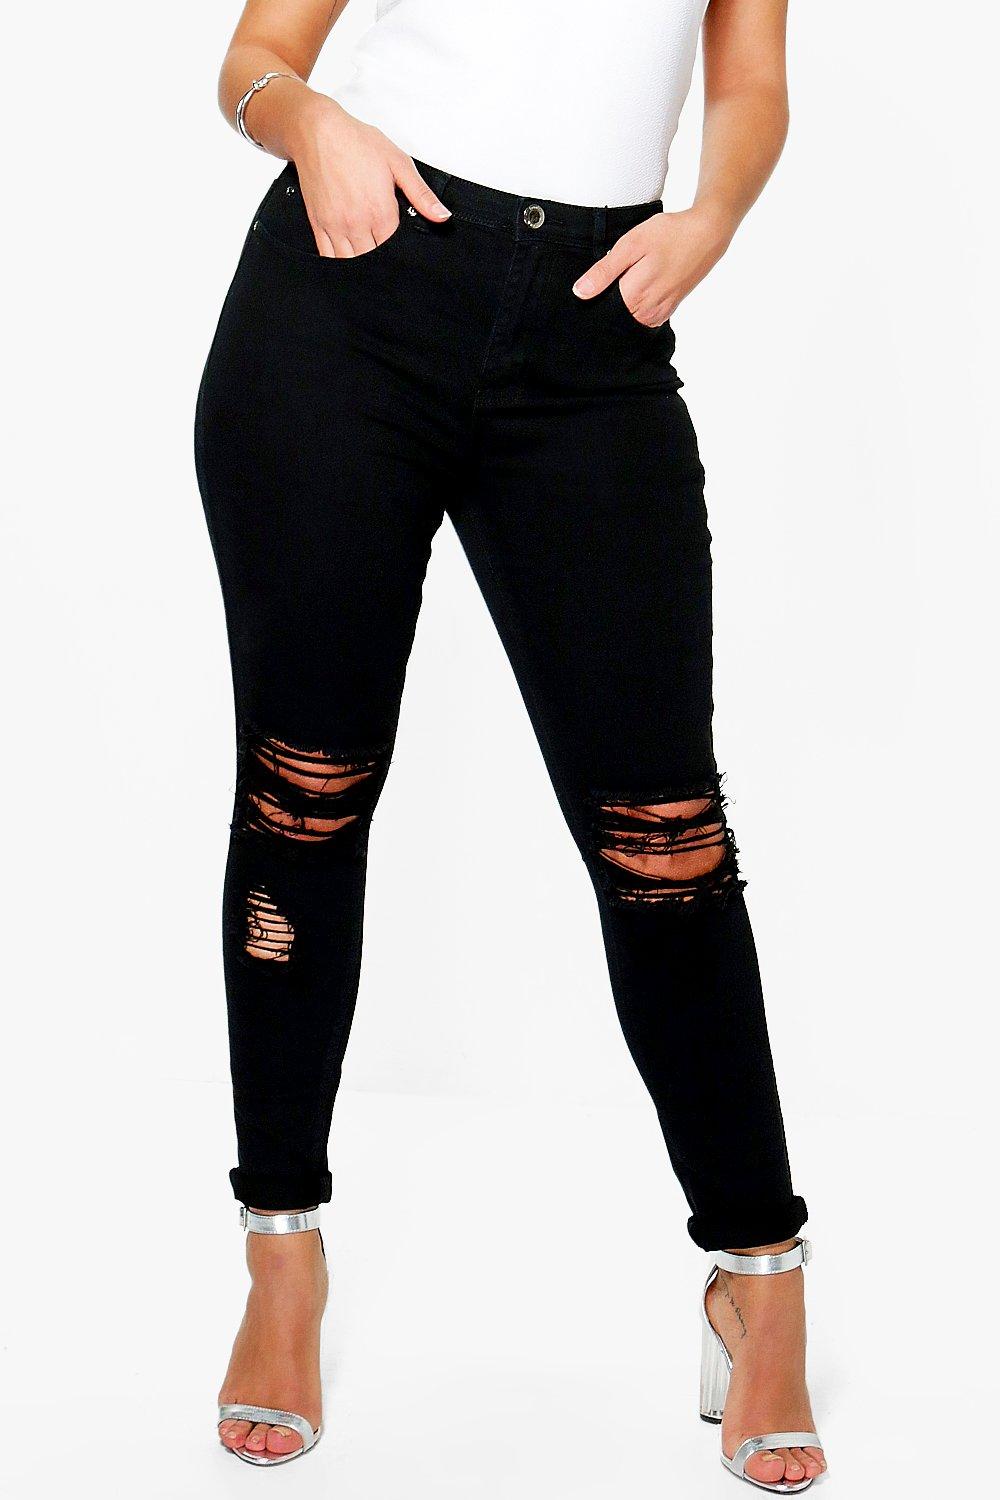 black denim jeans womens